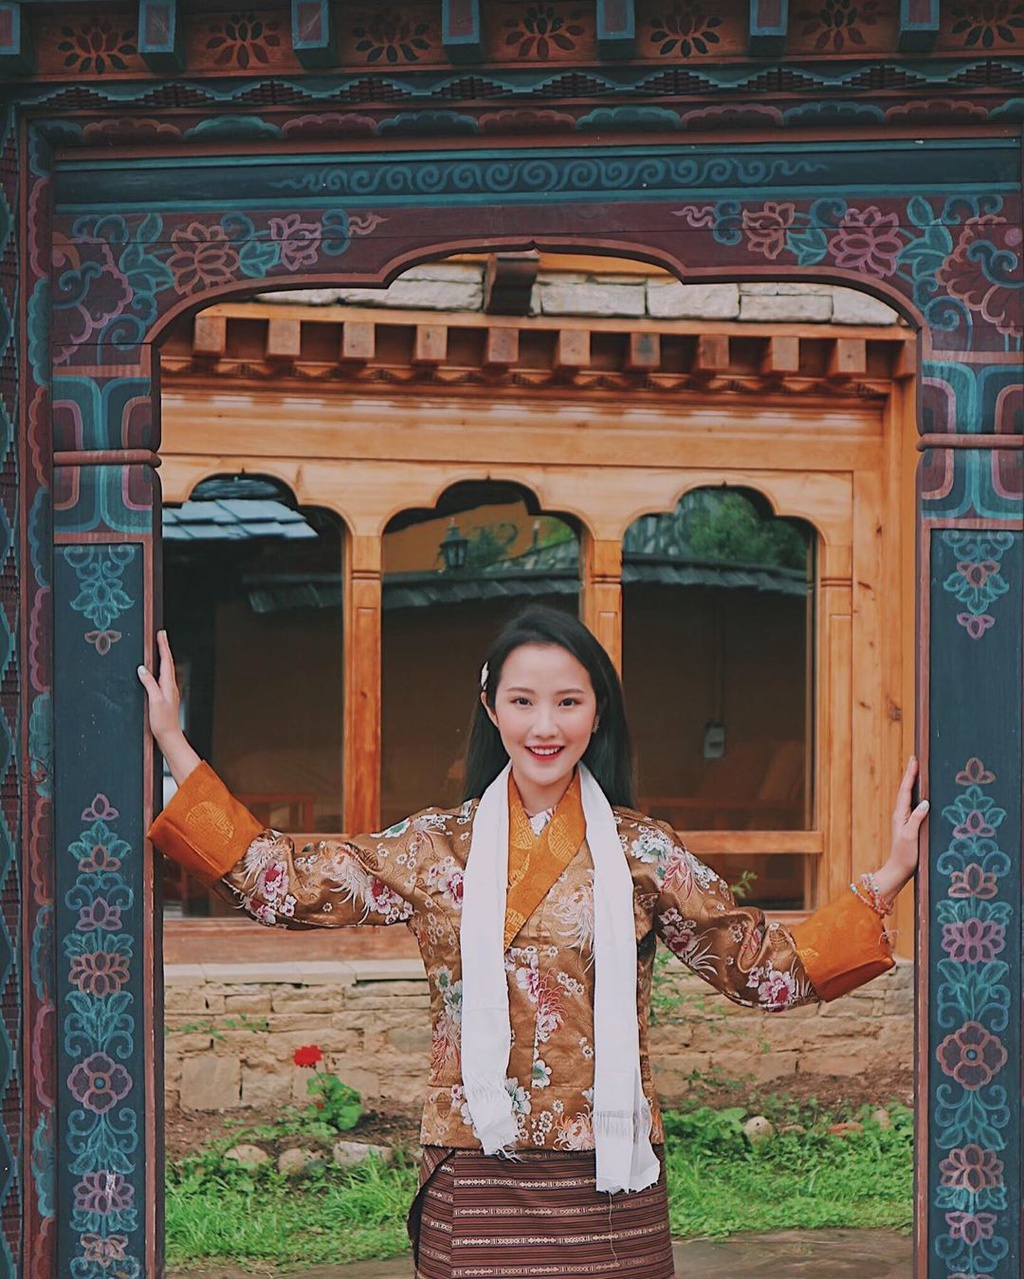 Kinh nghiem du lich Bhutan - vuong quoc hanh phuc nhat the gioi hinh anh 29 70034879_340809330137799_374595184592807974_n_1__1.jpg